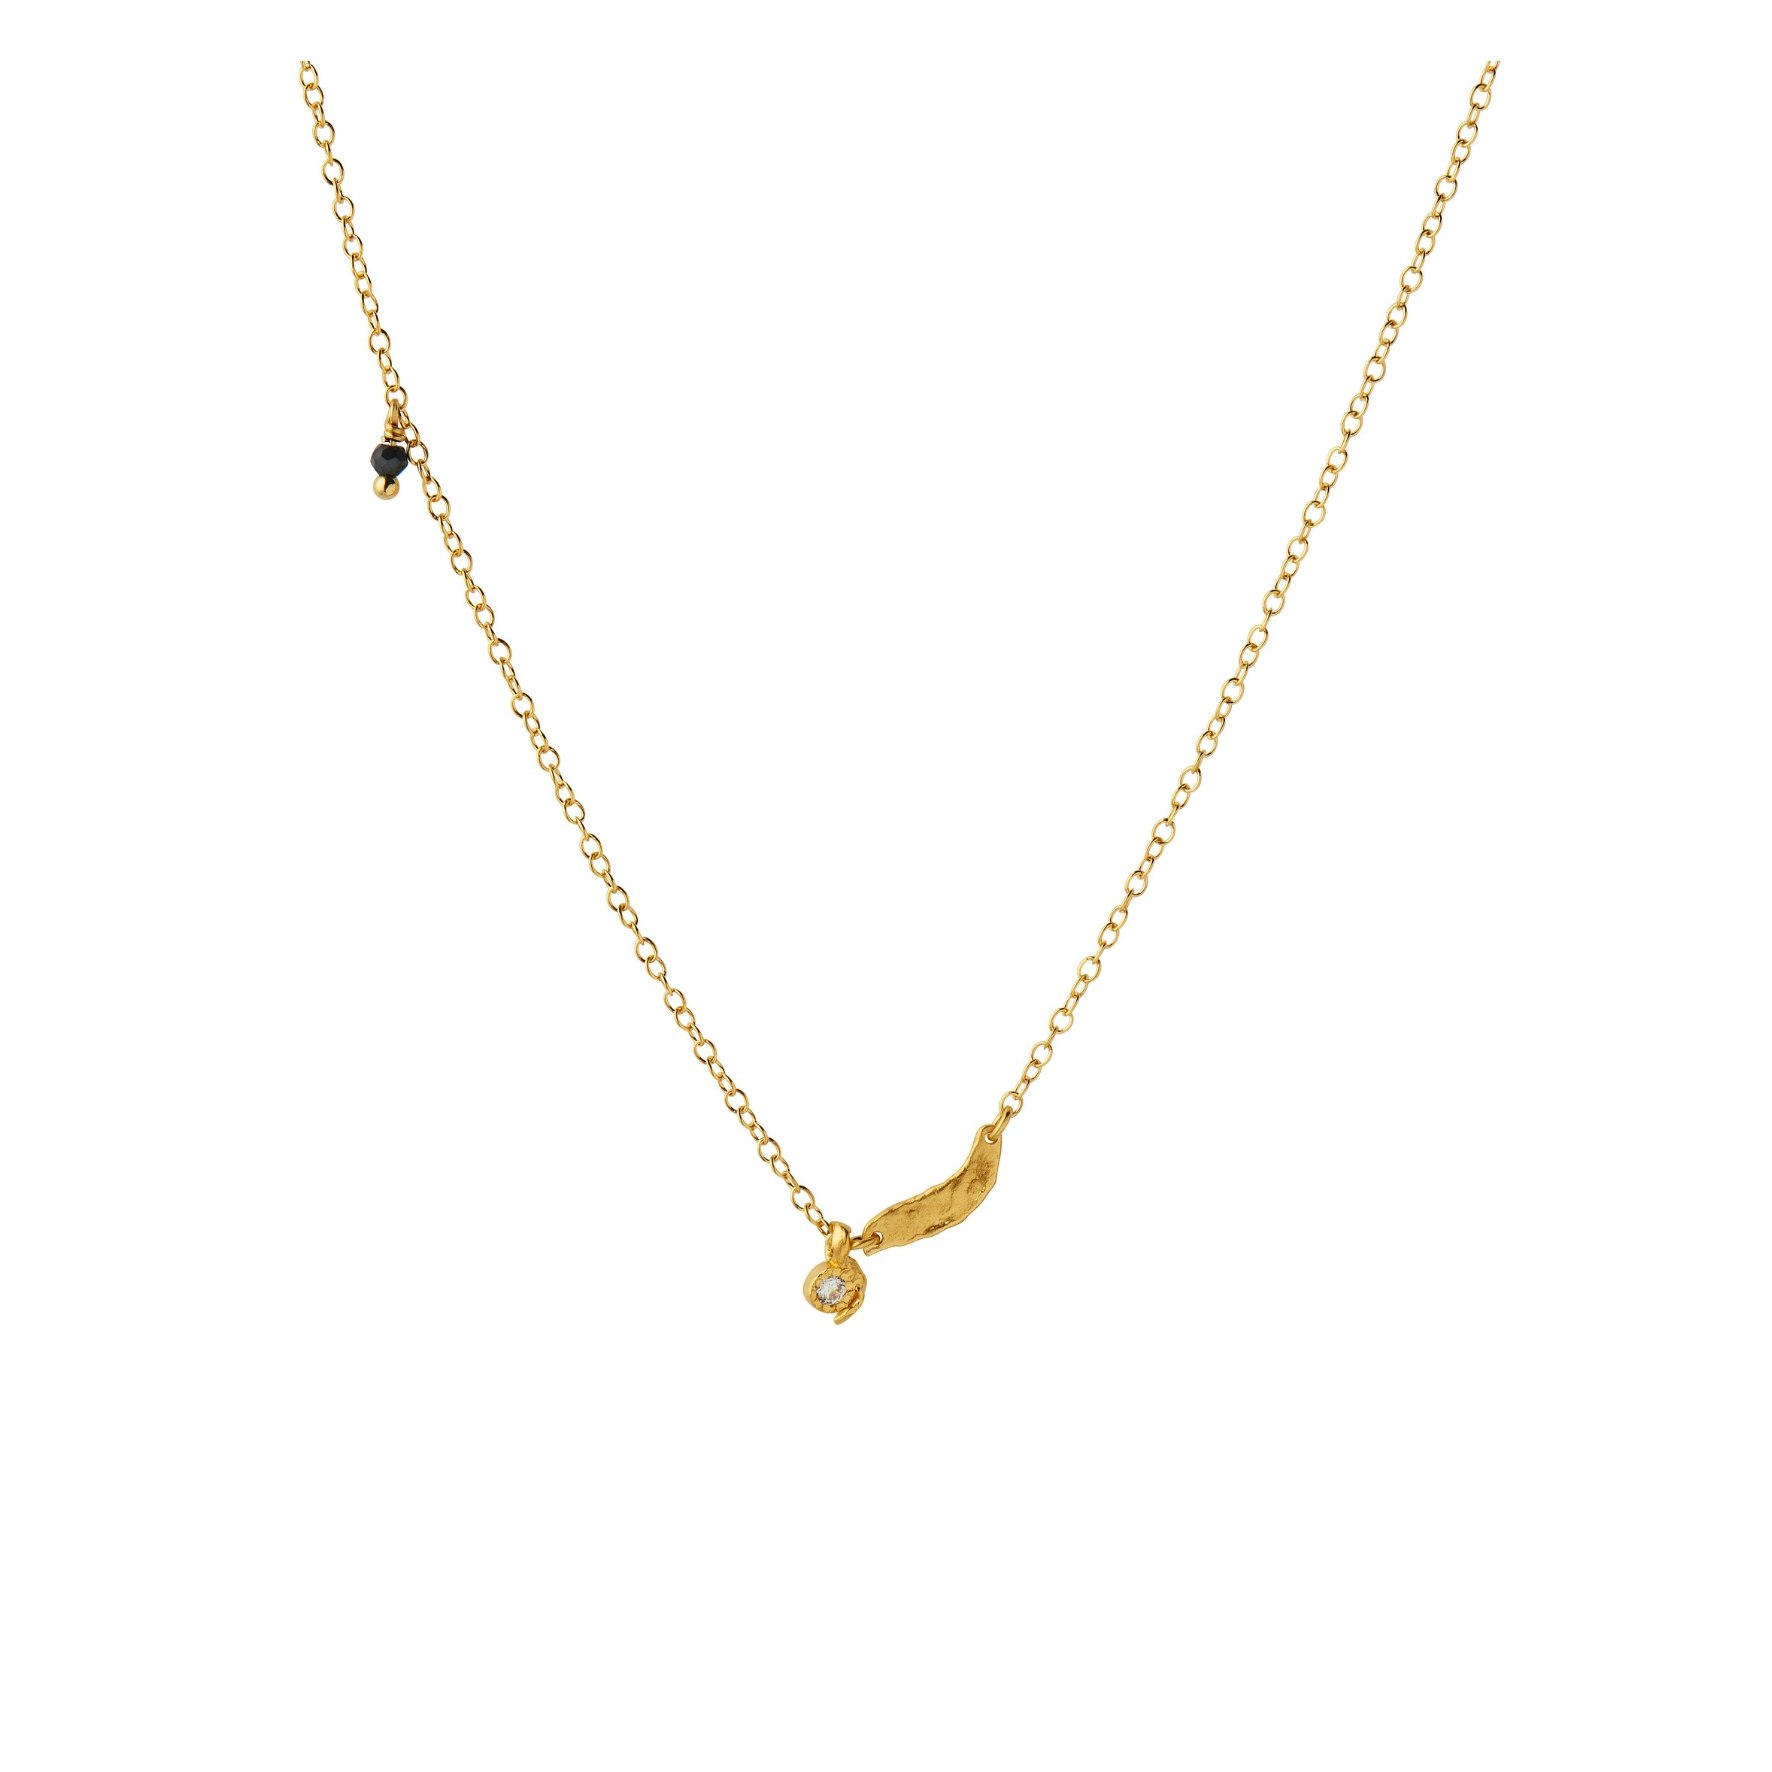 Flow Splash Necklace With Stones fra STINE A Jewelry i Forgylt-Sølv Sterling 925